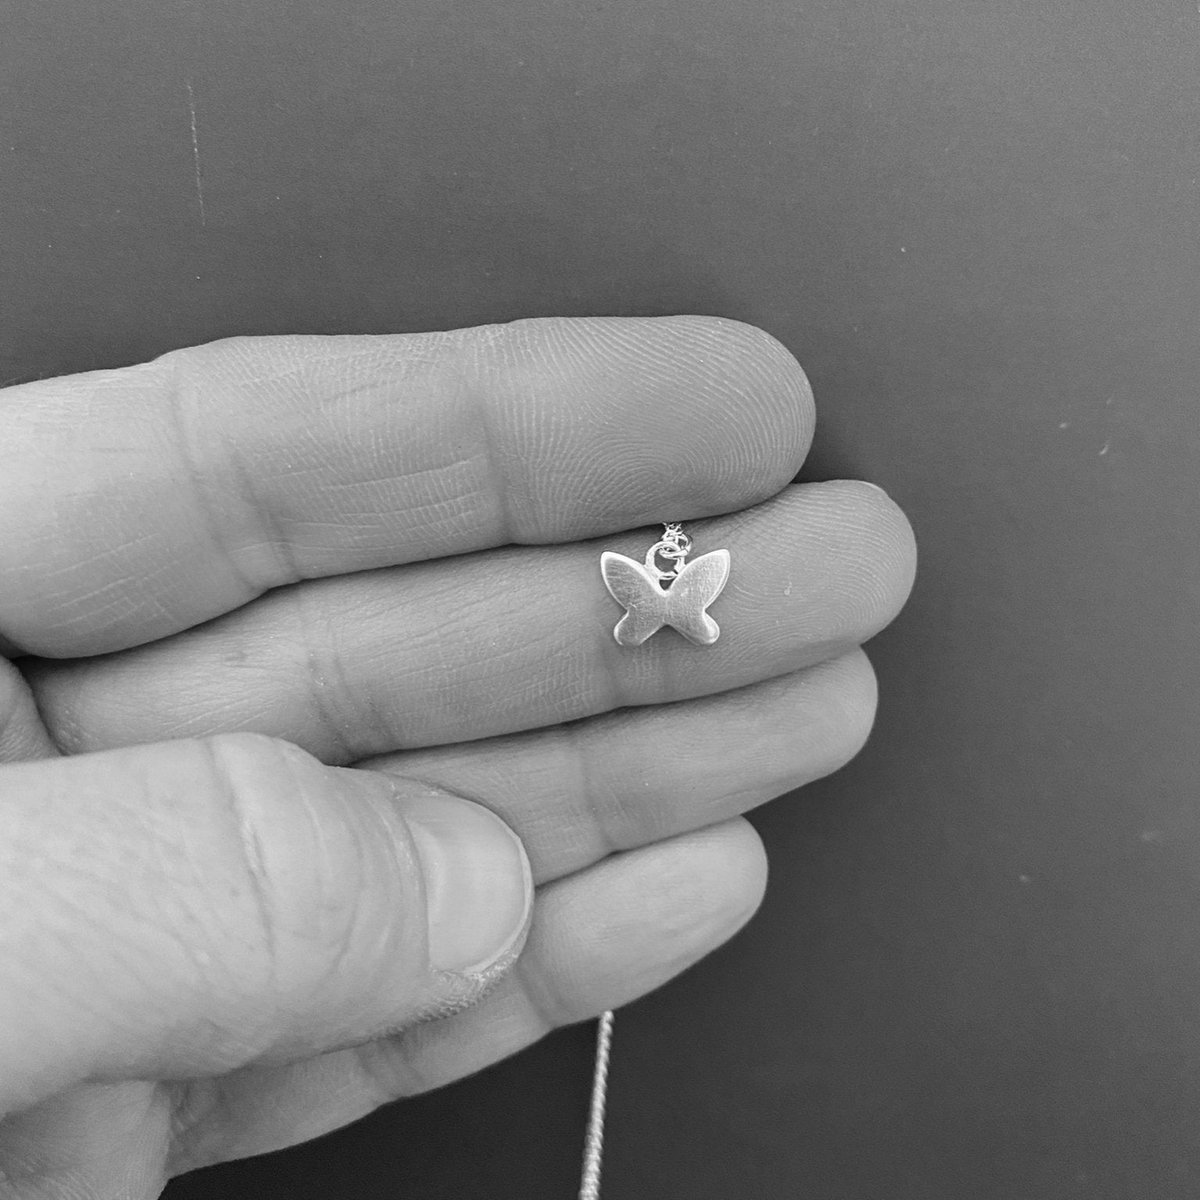 Tiny Sterling Silver Butterfly Pendant tuppu.net/419d3e84 #shopsmall ##UKGiftHour #HandmadeHour #giftideas #UKHashtags #bizbubble #inbizhour #MHHSBD #SterlingSilverButterfly